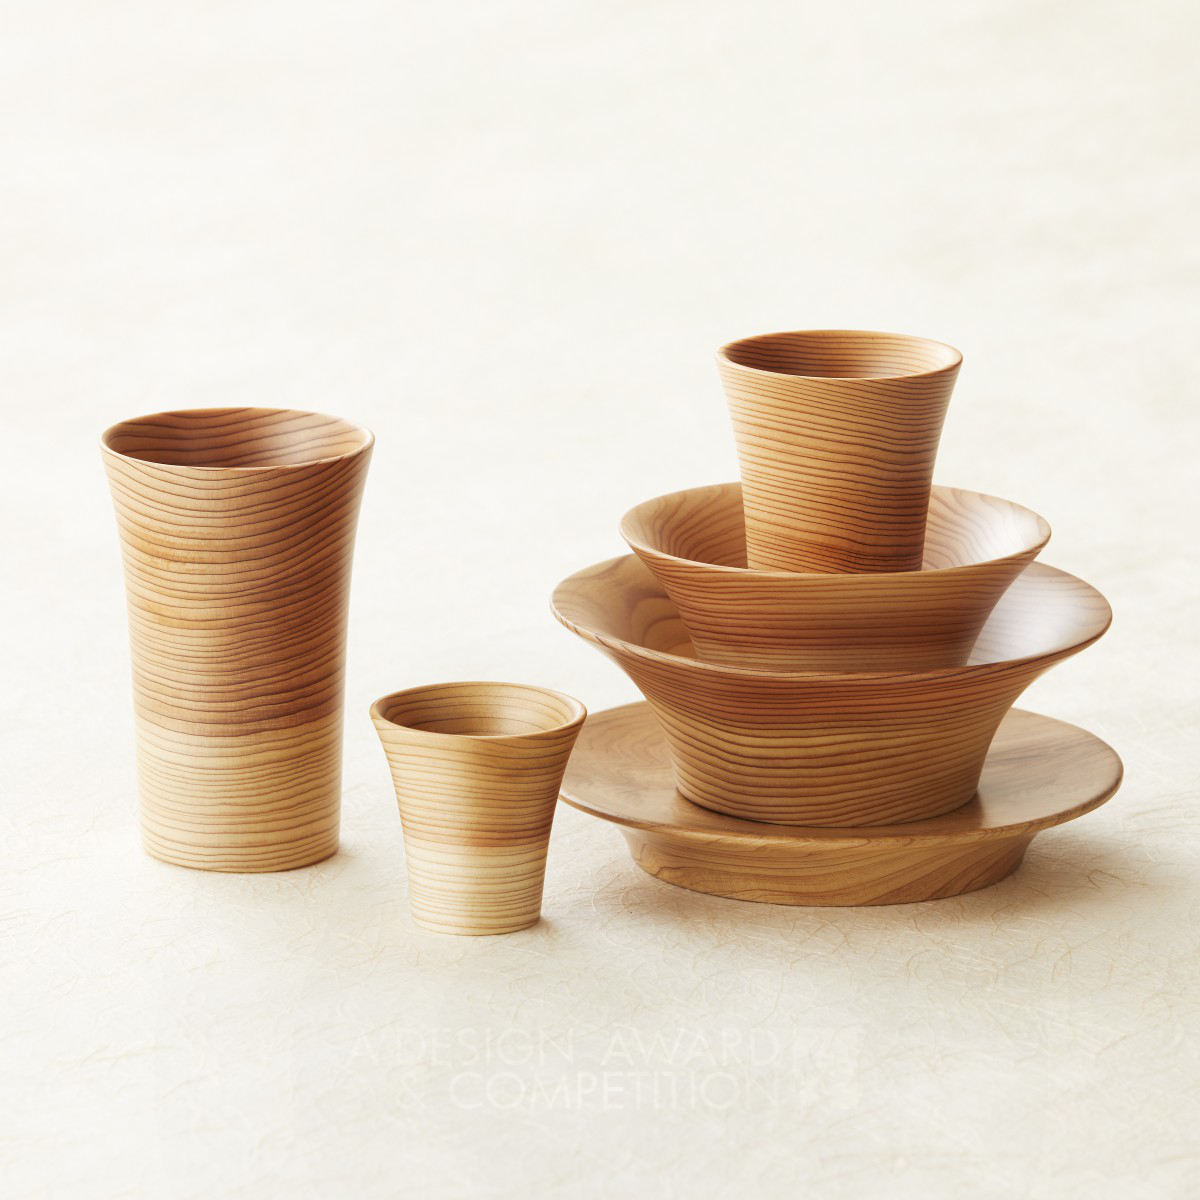 Kamiyama SHIZQ Project <b>Wooden Tableware